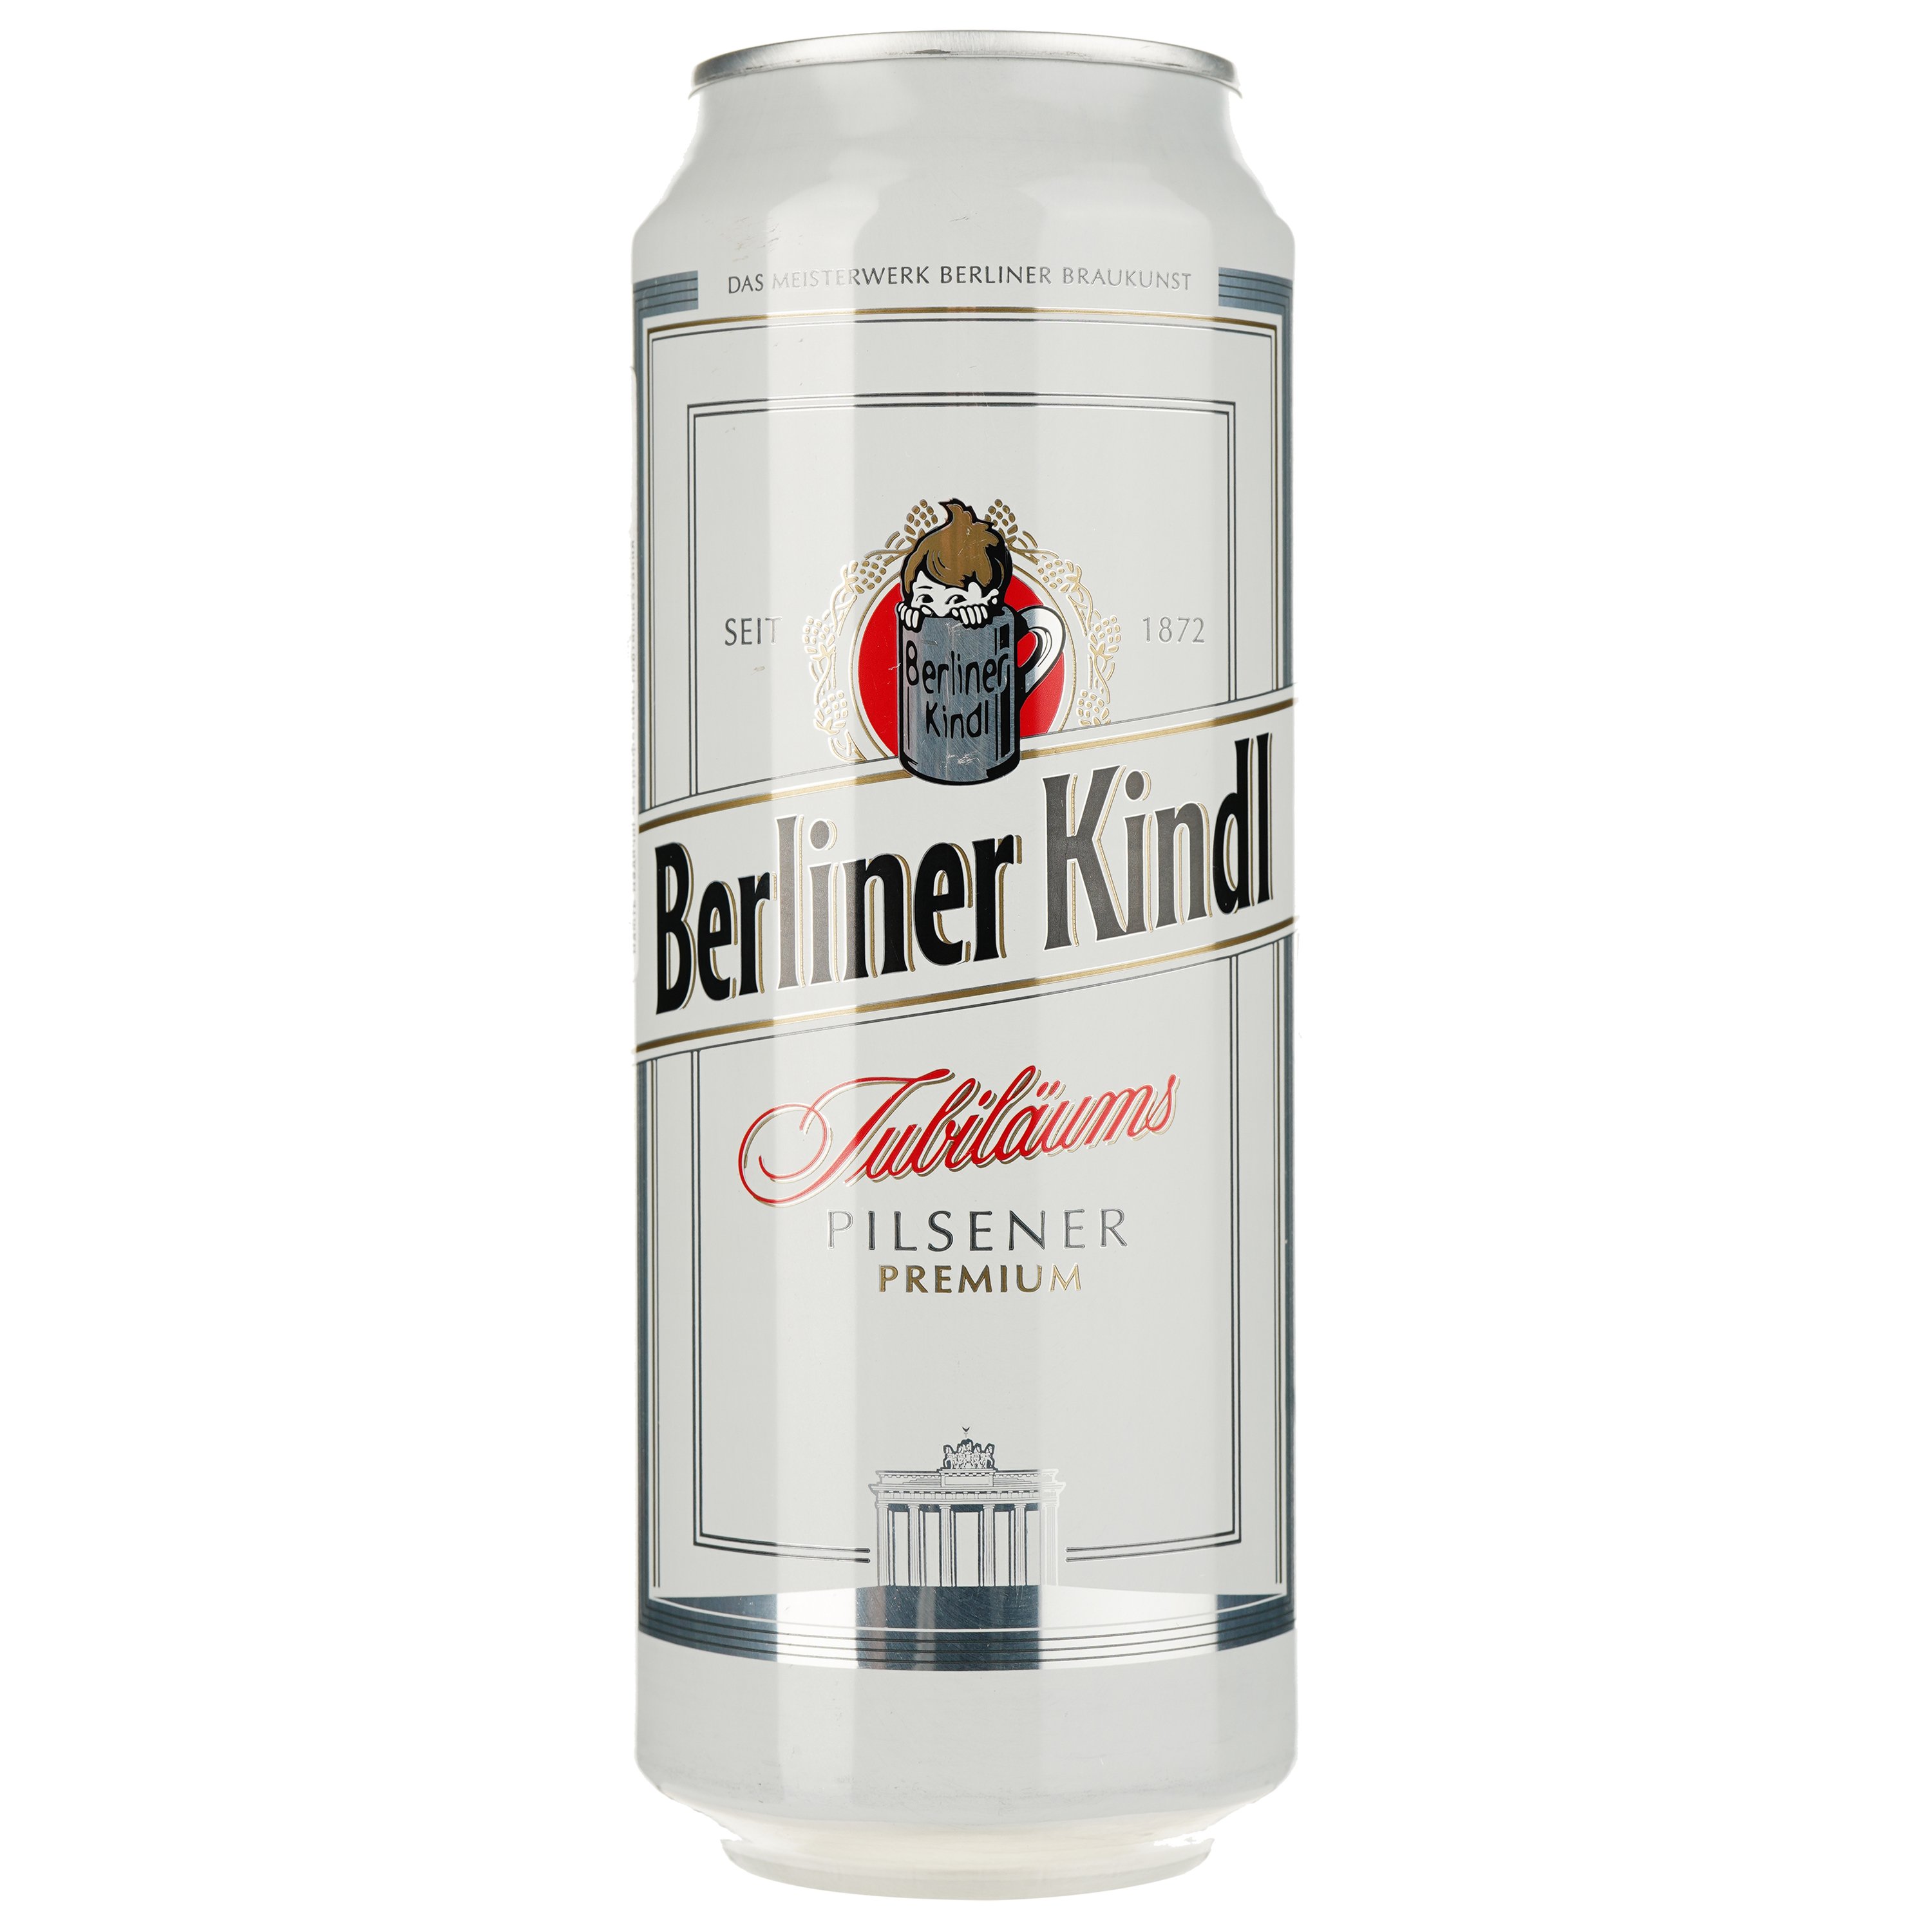 Пиво Berliner Kindl Jubilaums Pilsner светлое, 5.1%, ж/б, 0.5 л - фото 1